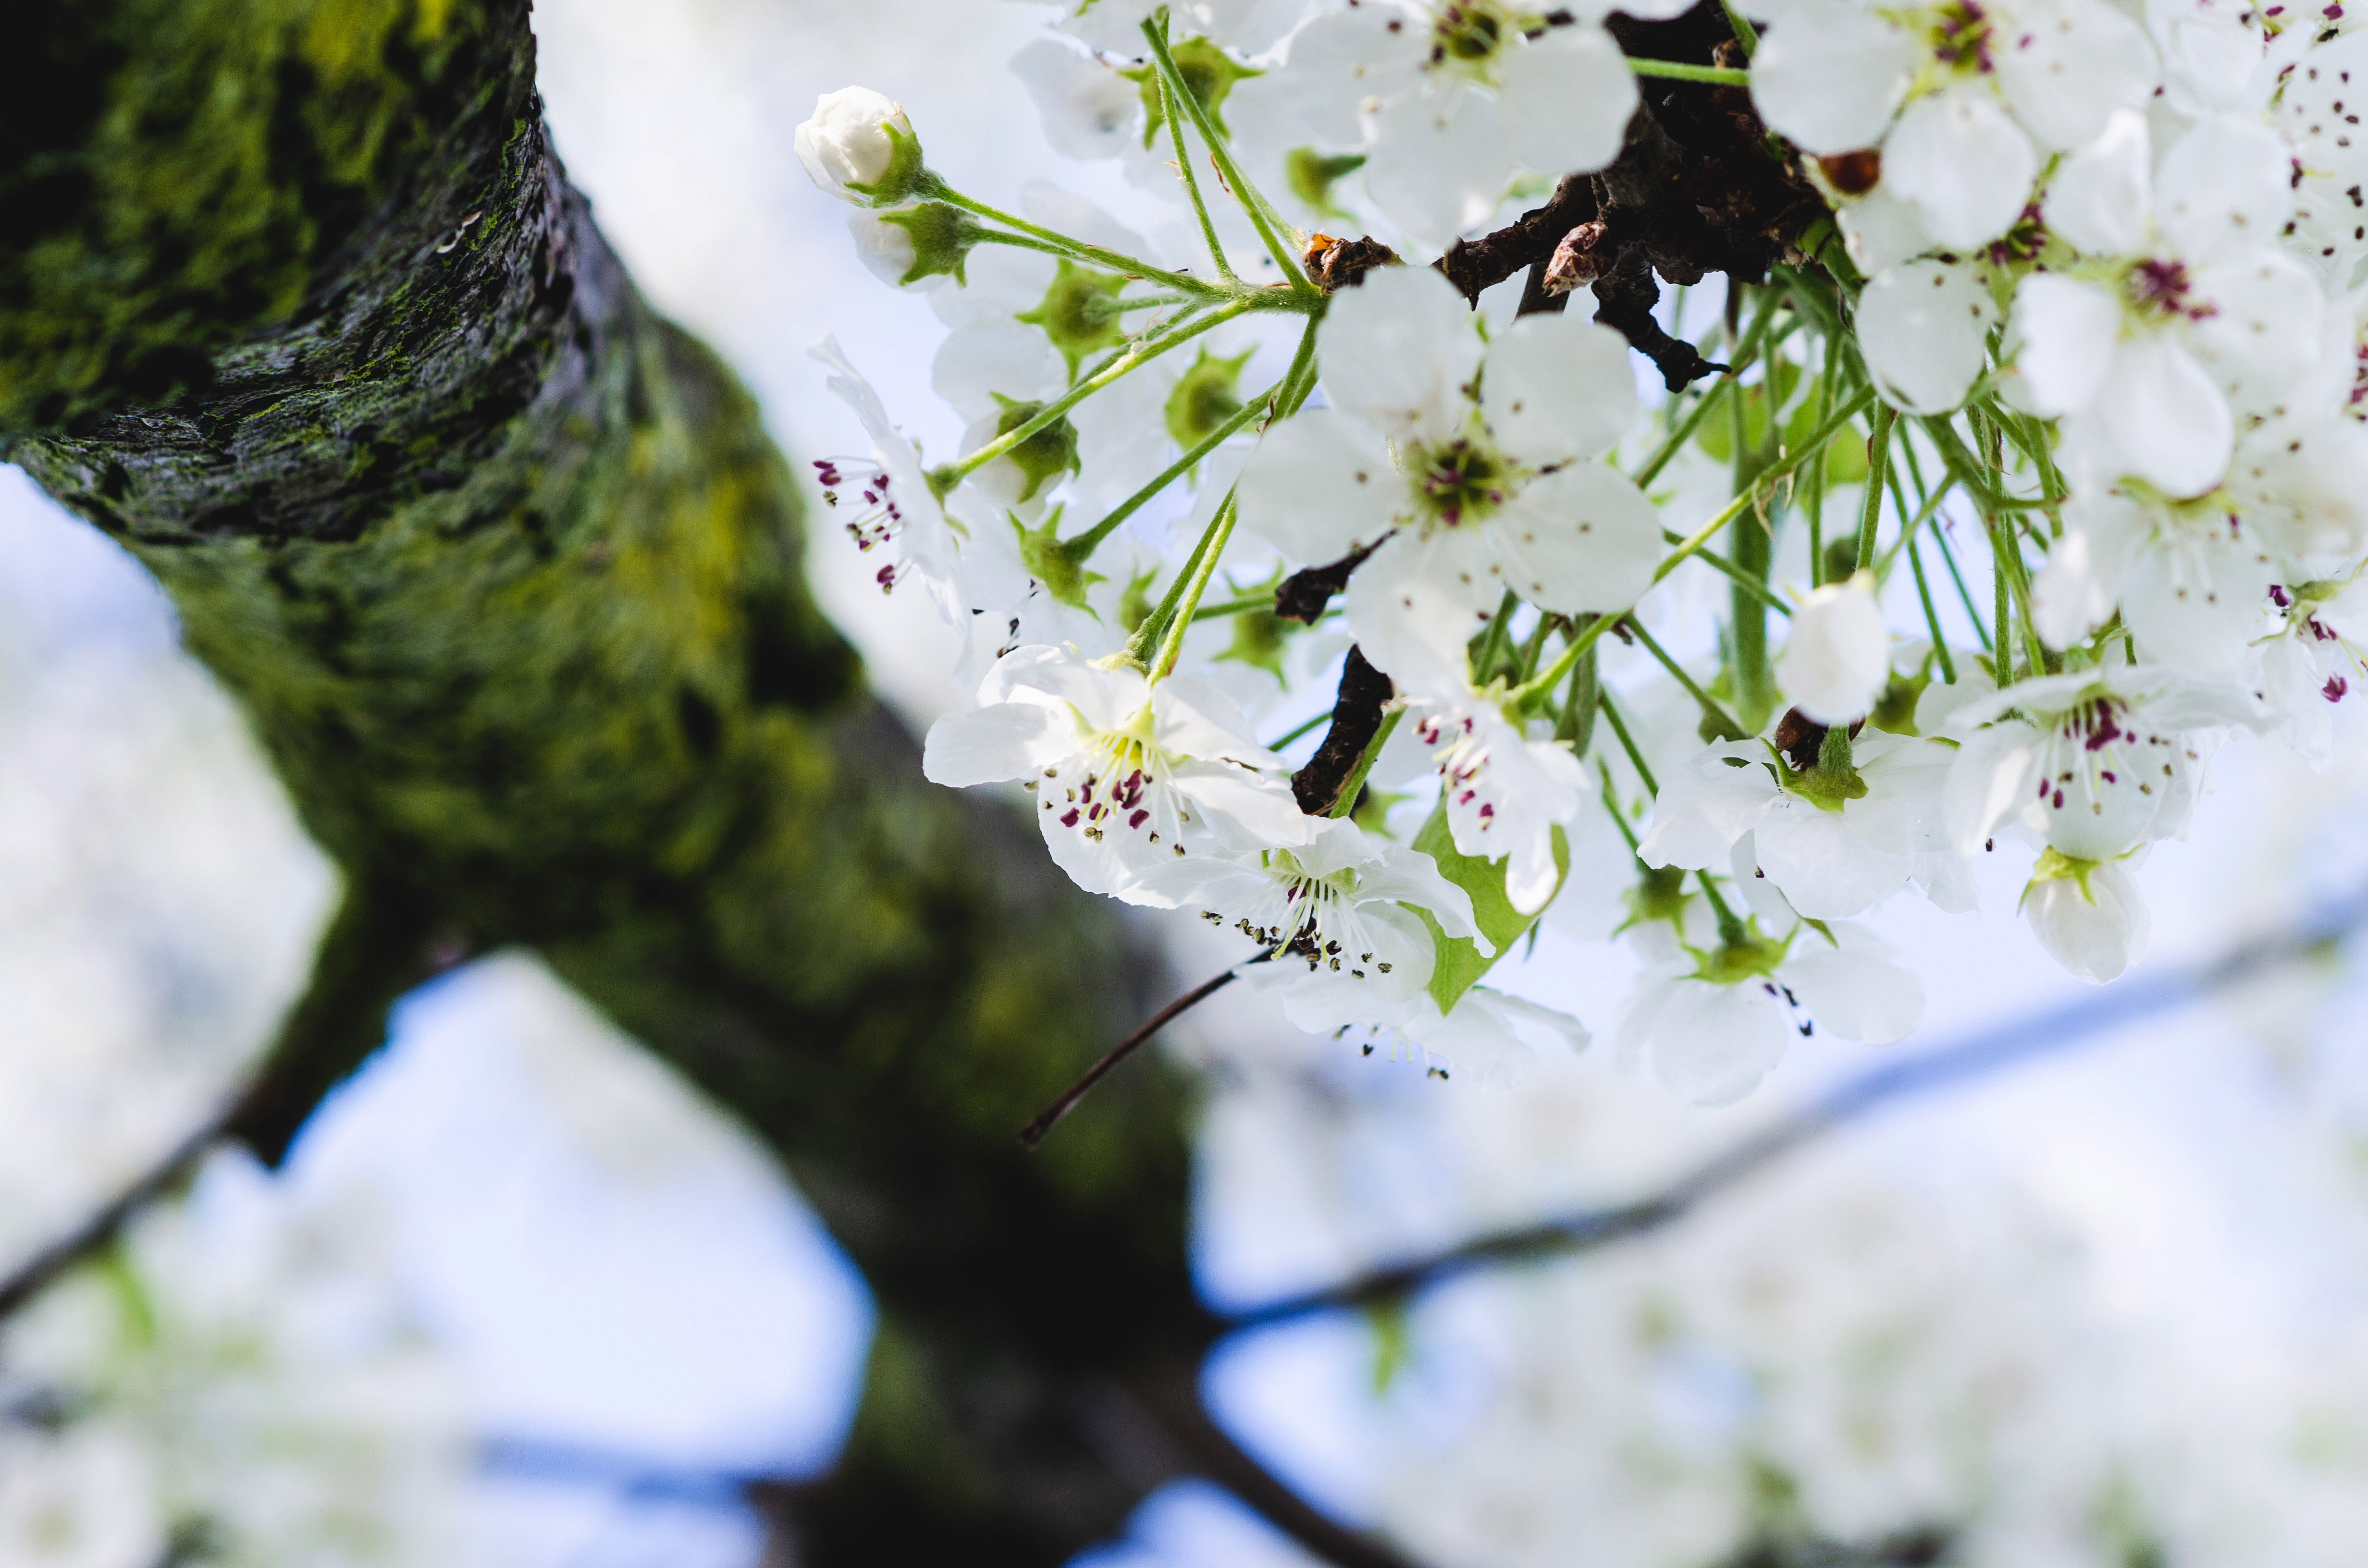 White Flowers on tree in Trenton, New Jersey image - Free stock ...